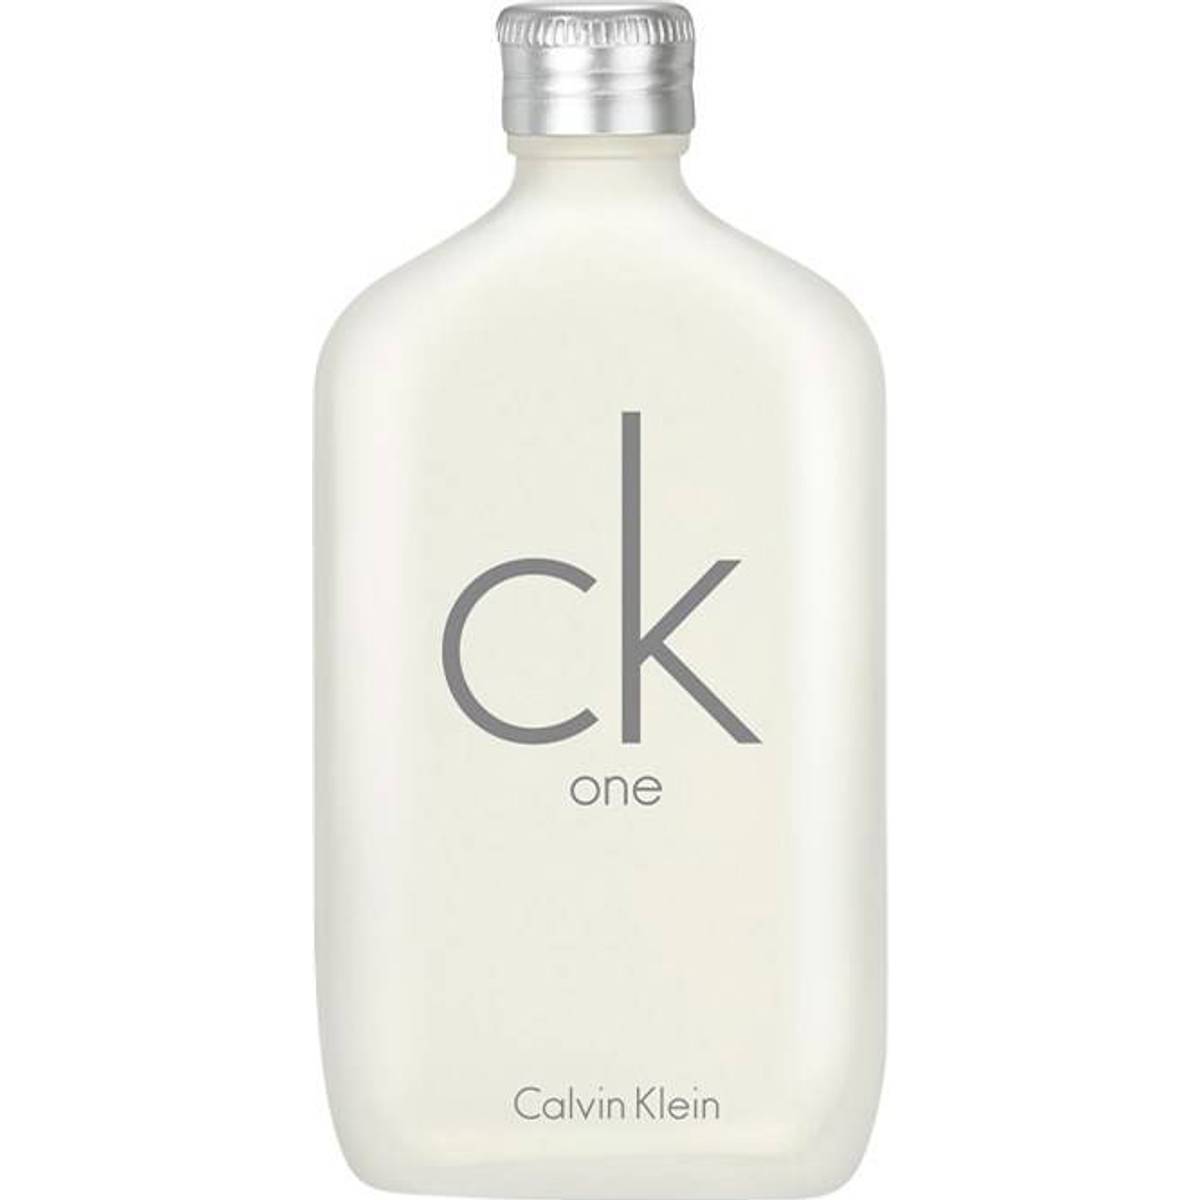 Calvin Klein Parfym (1000+ produkter) hos PriceRunner • Se priser nu »